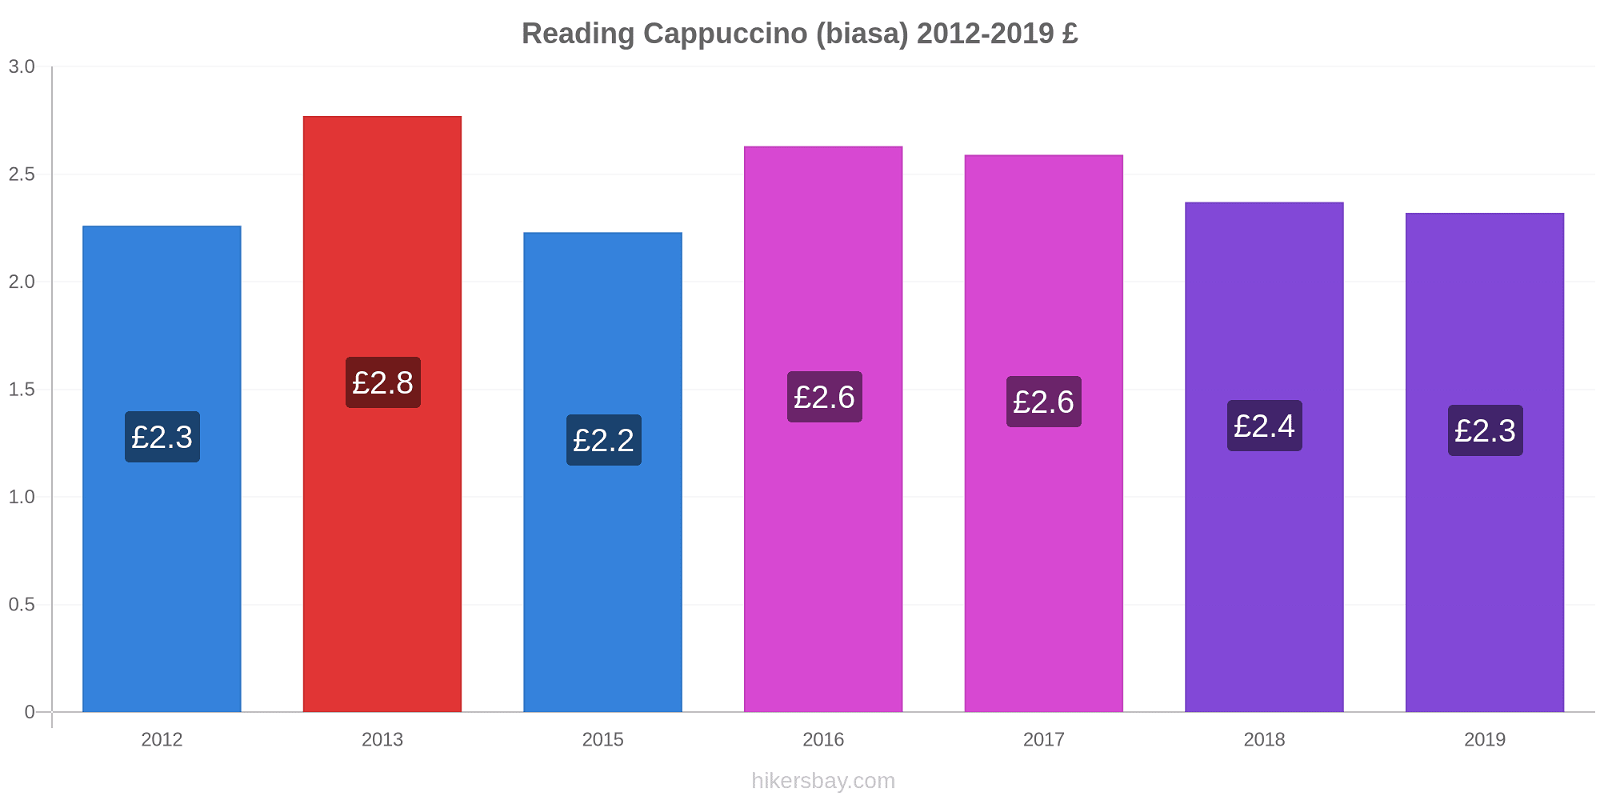 Reading perubahan harga Cappuccino (biasa) hikersbay.com